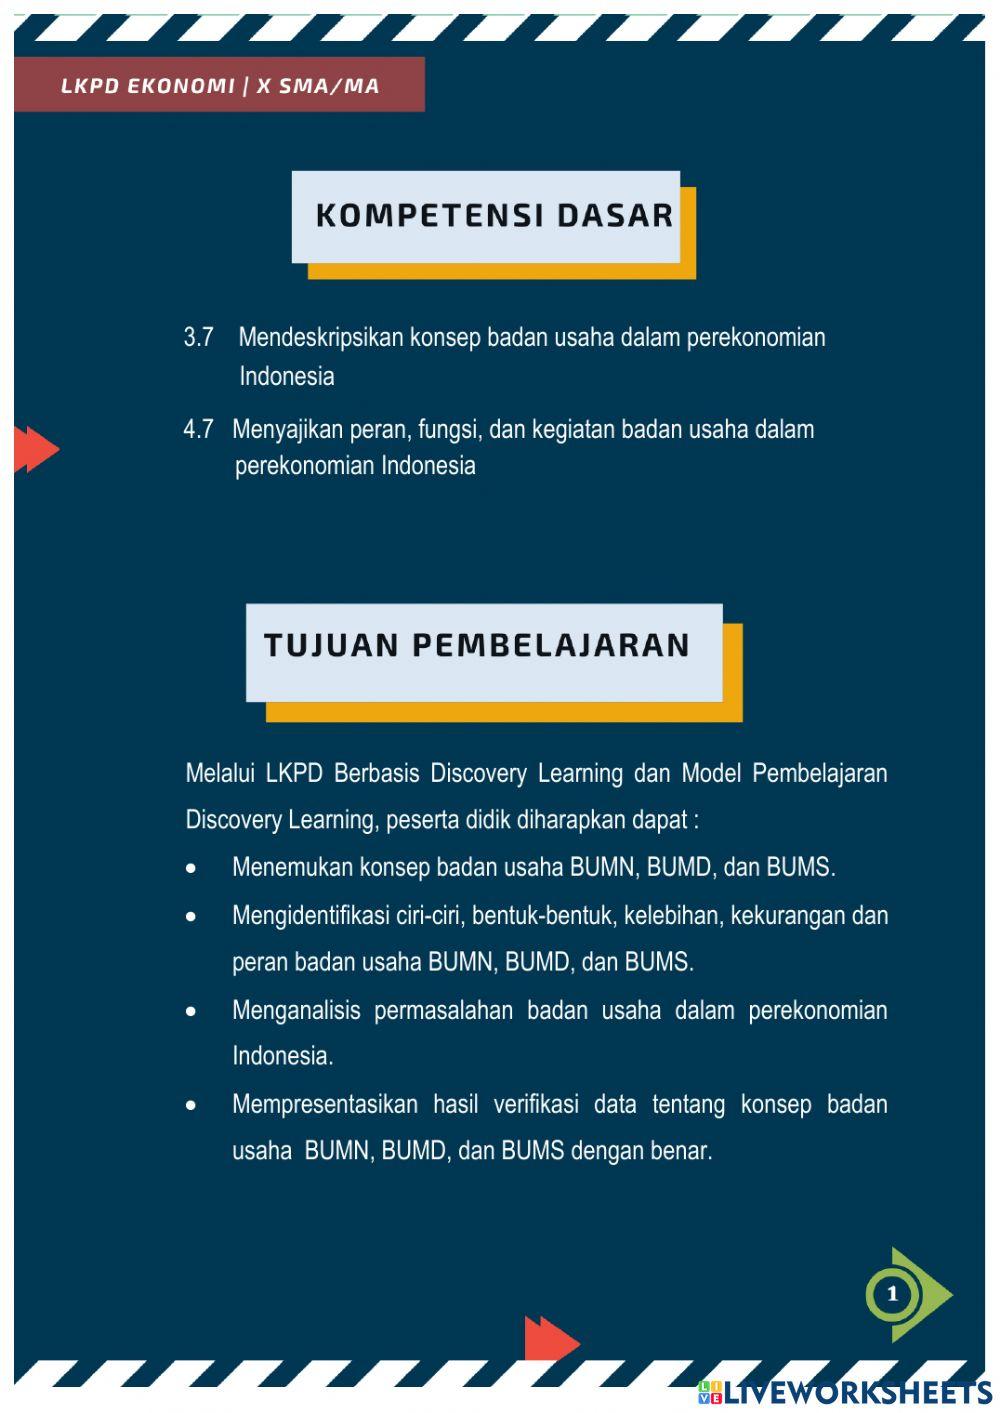 LKPD Elektronik-Badan Usaha Dalam Perekonomian Indonesia-X-Ekonomi